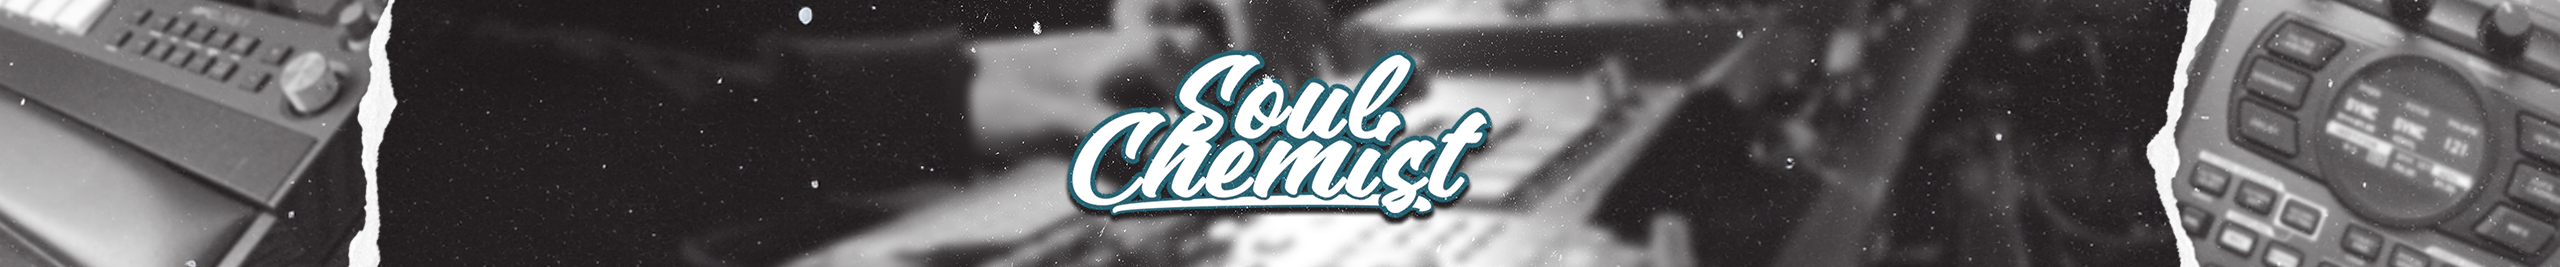 Soul Chemist's profile banner